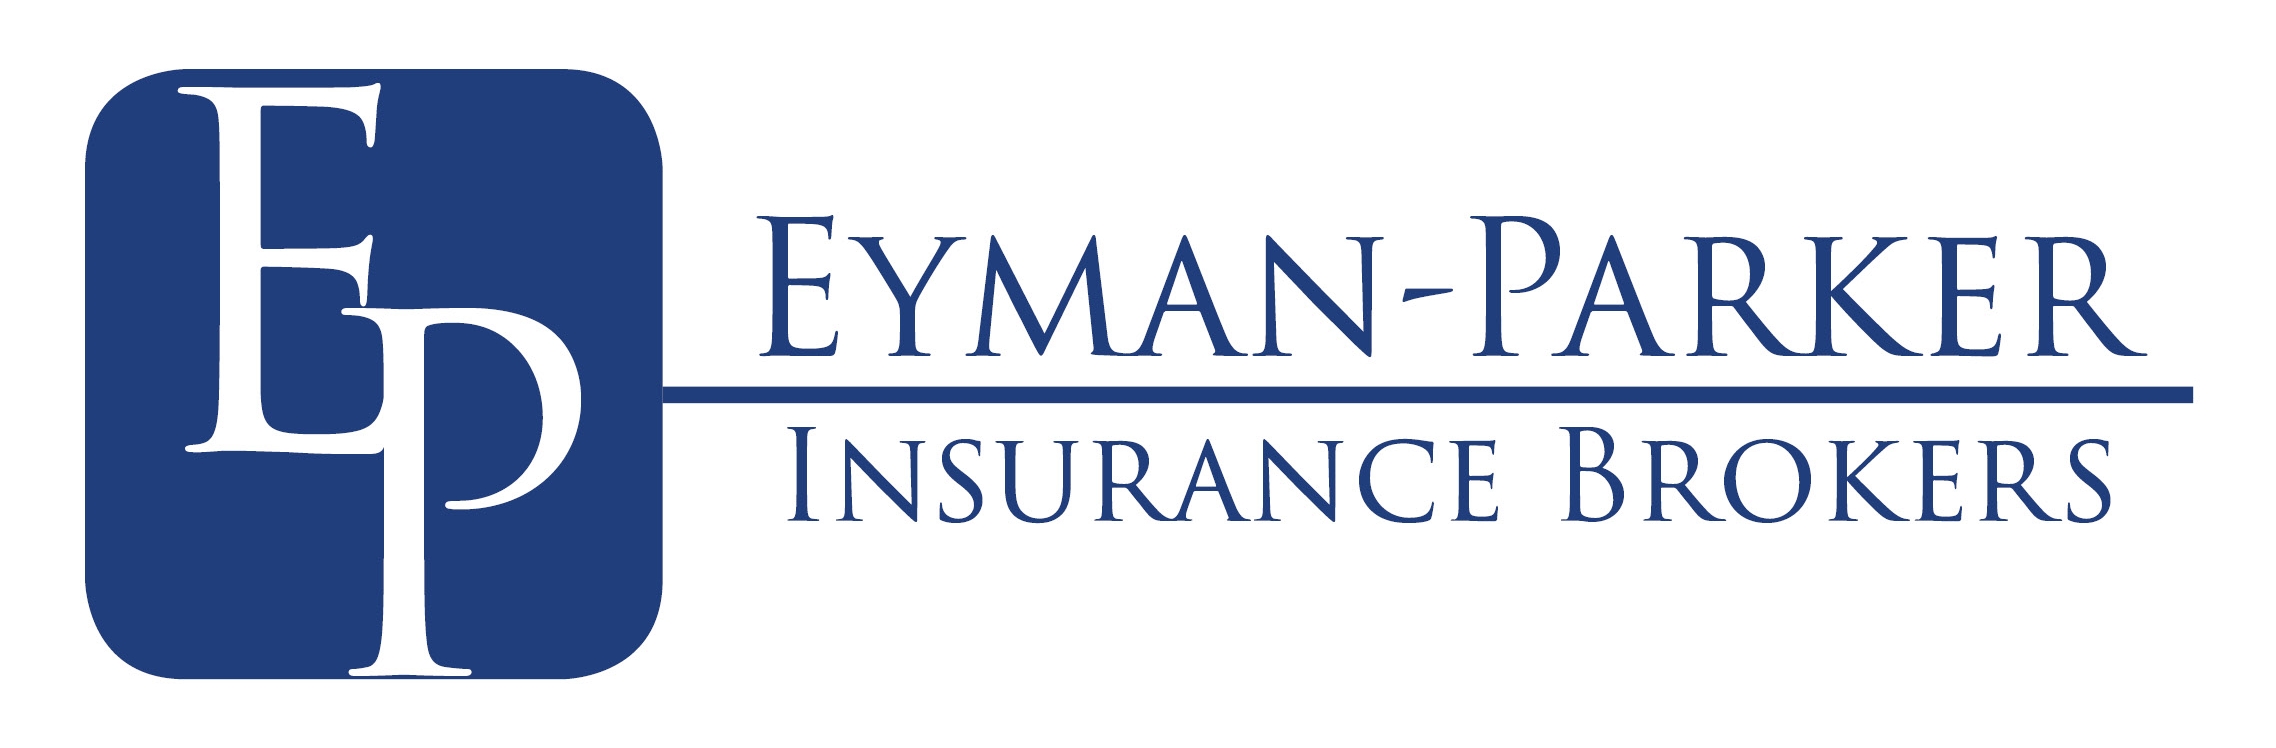 Eyman-Parker Insurance Brokers logo